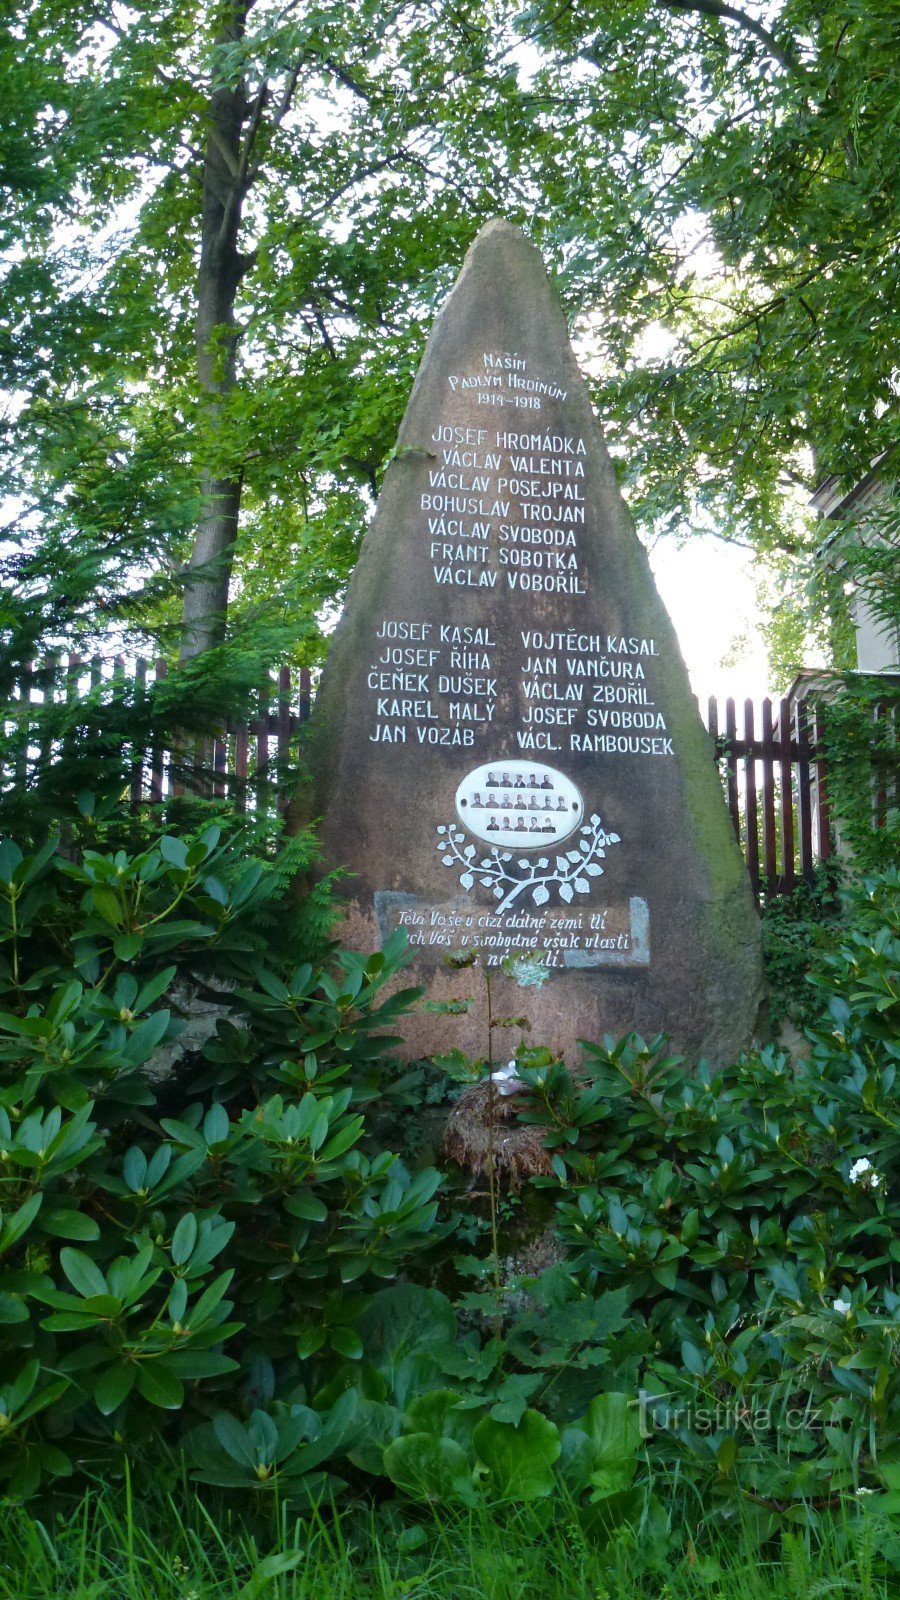 17 navne er indgraveret i monumentet